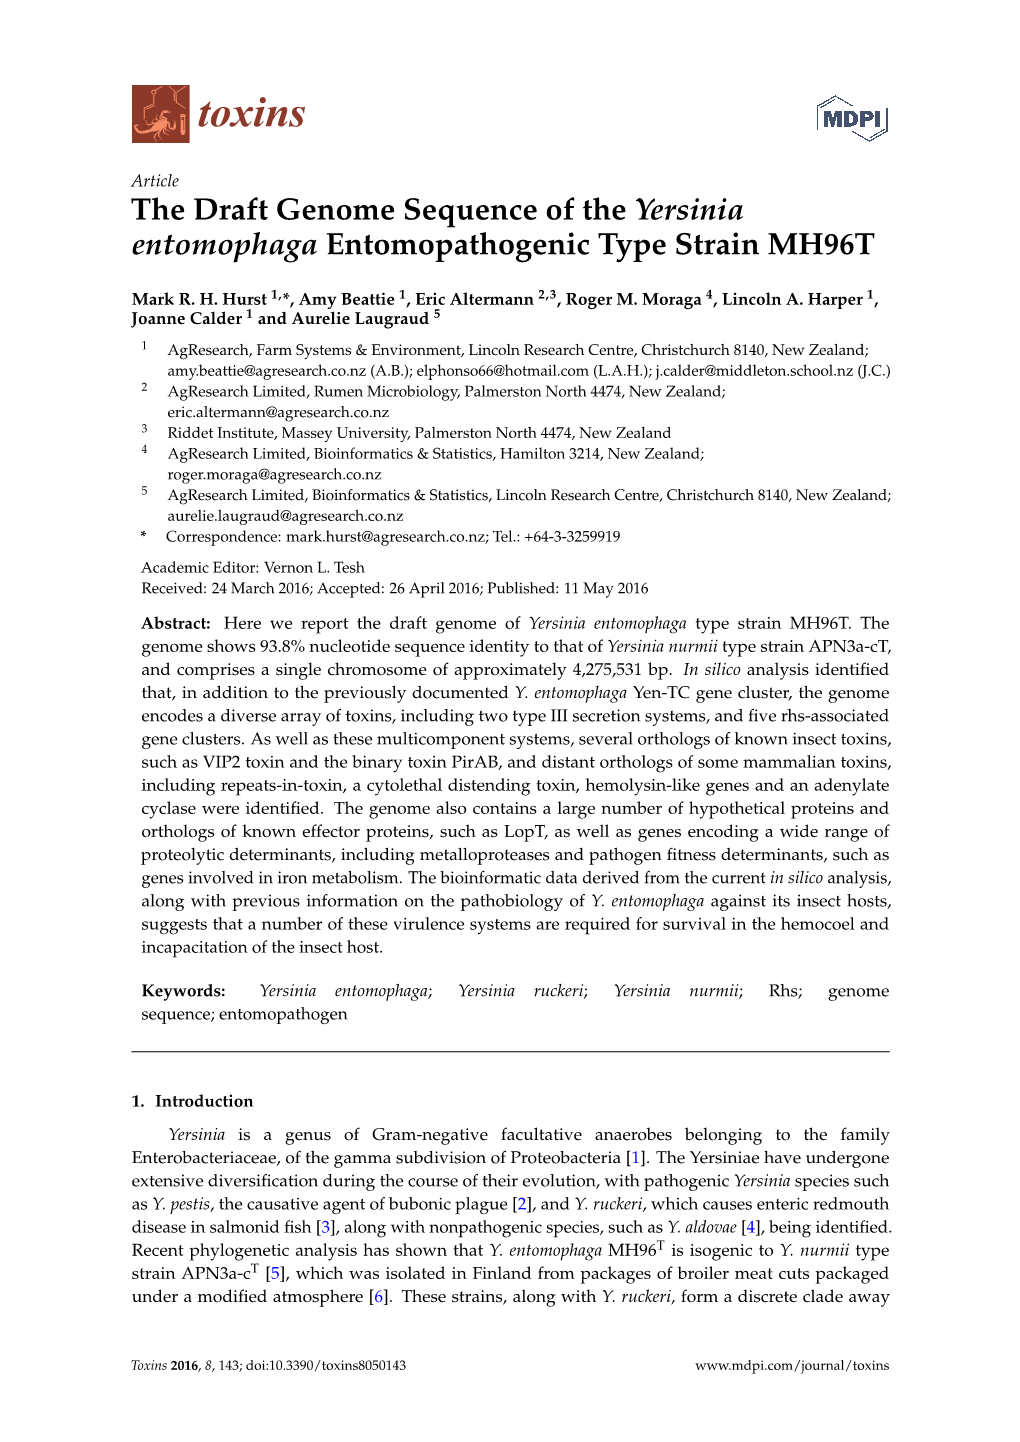 The Draft Genome Sequence of the Yersinia Entomophaga Entomopathogenic Type Strain MH96T